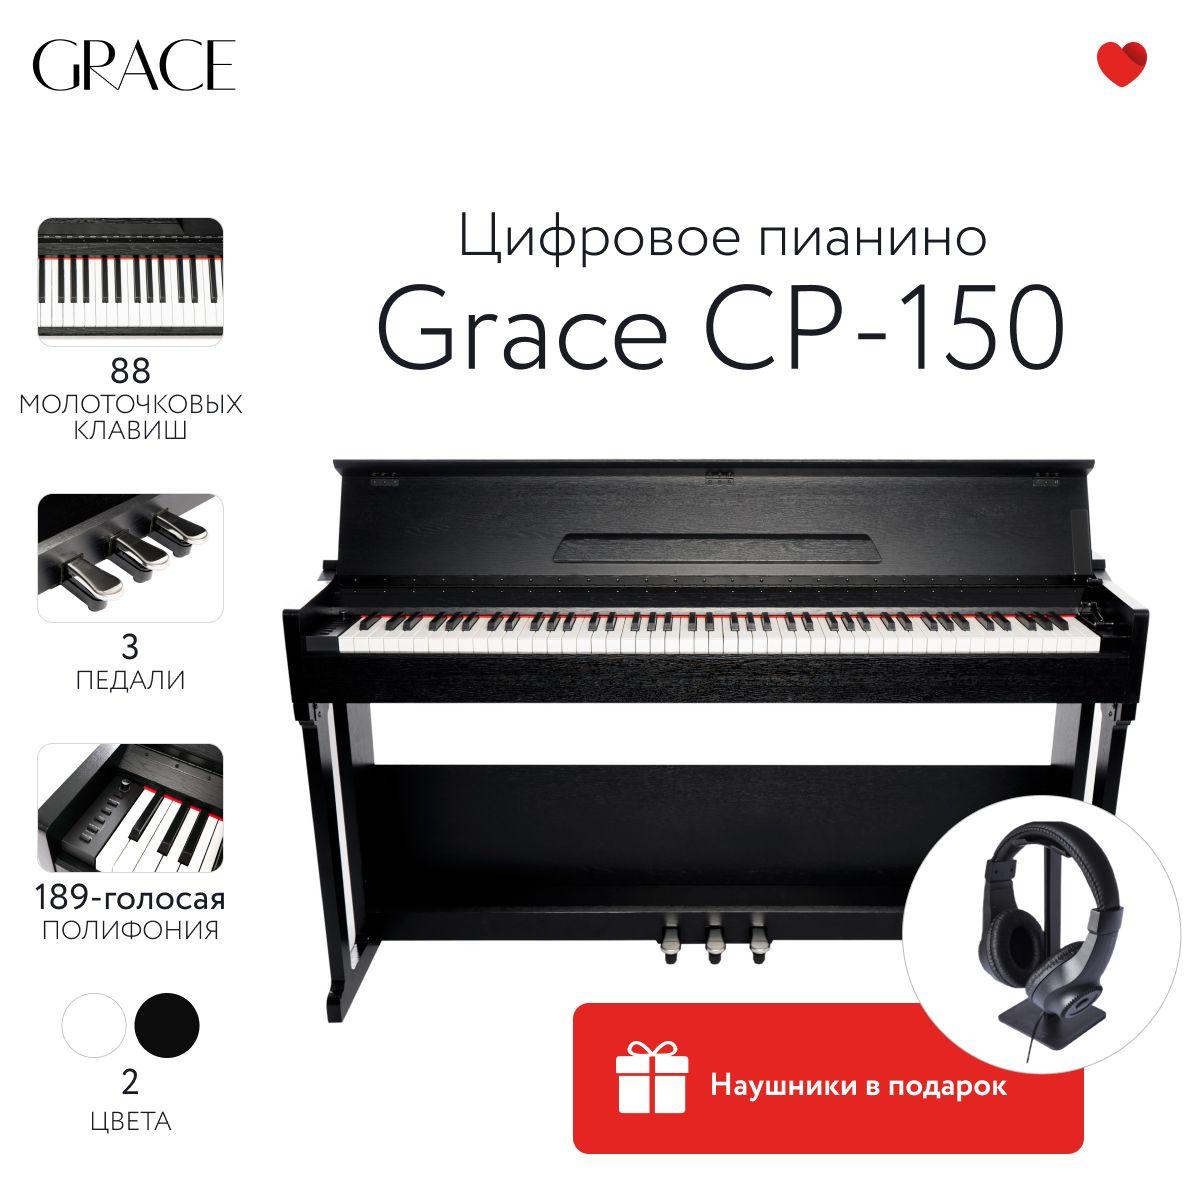 Grace CP-150 BK - Цифровое пианино в корпусе с тремя педалями